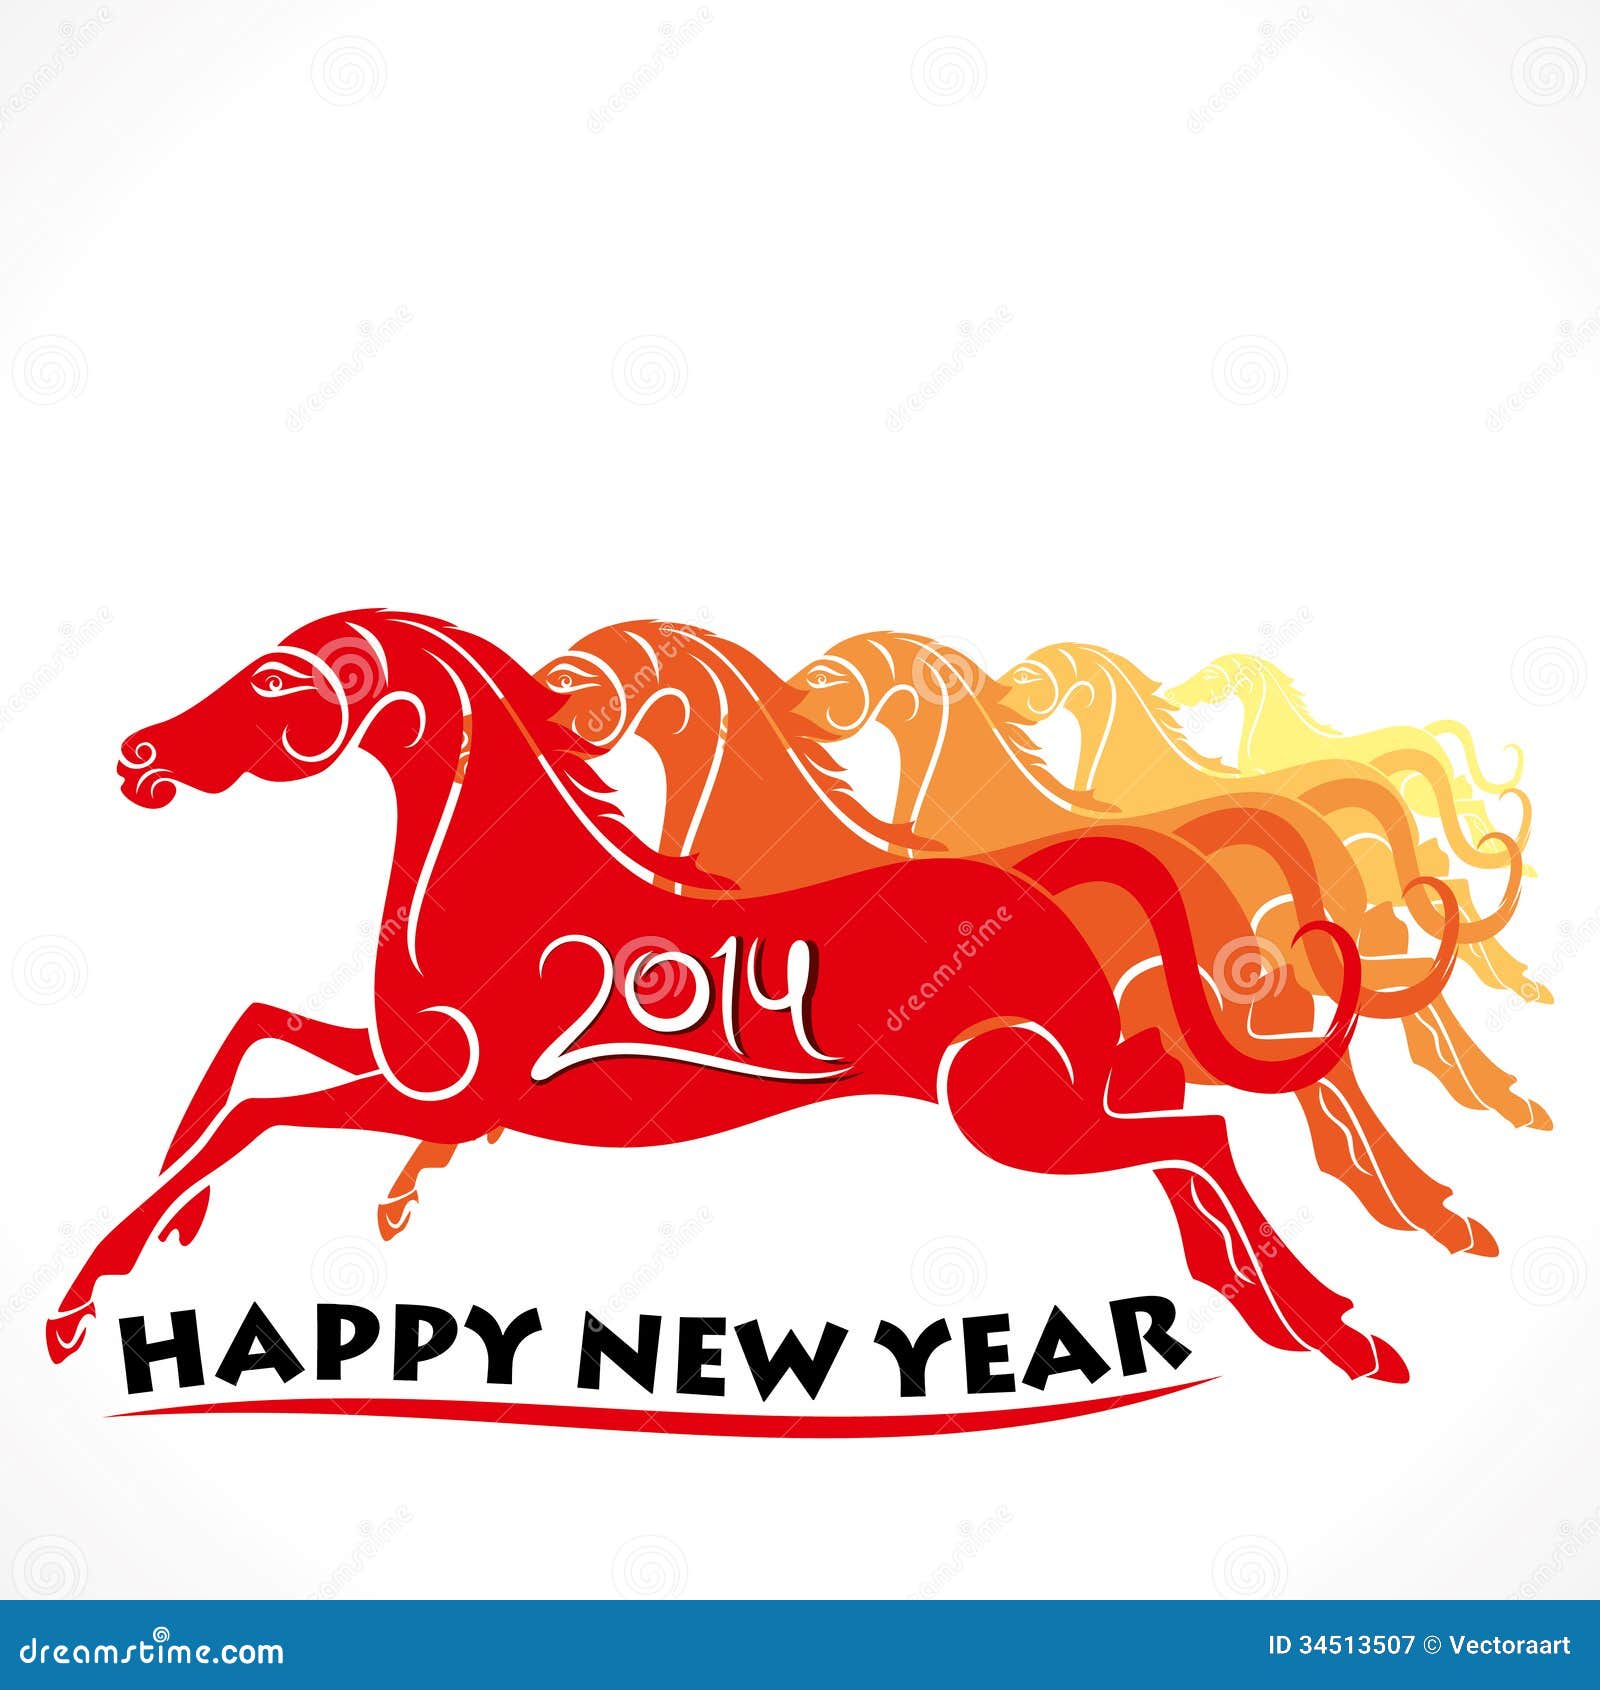 happy new year 2014 clipart animated - photo #45